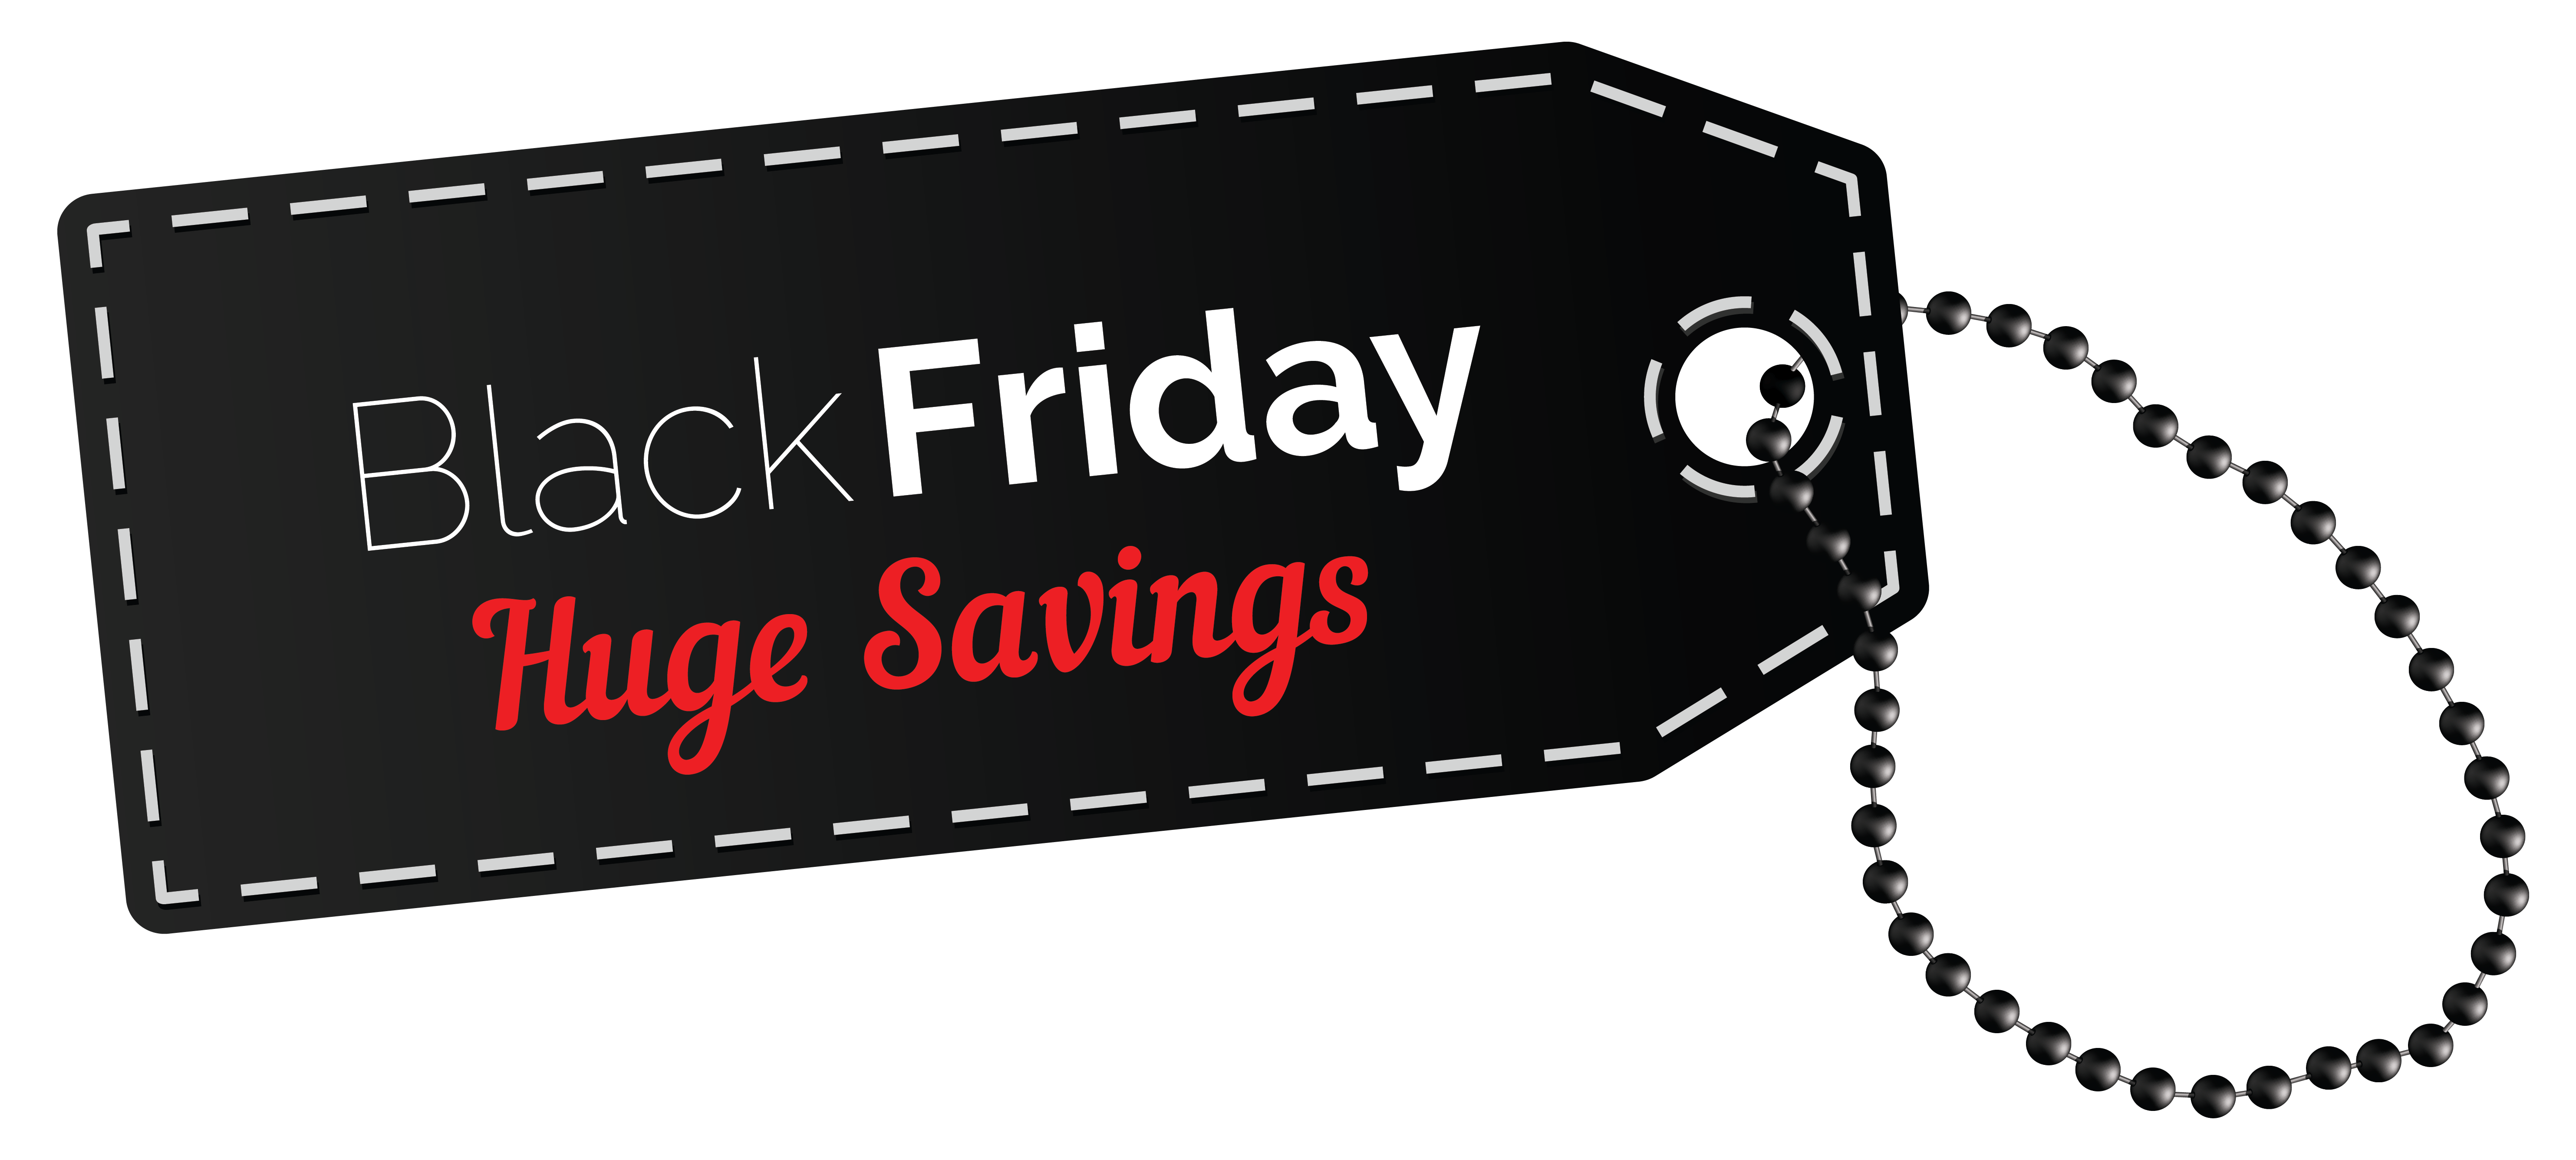 Black Friday Huge Savings Tag PNG Clipart Image